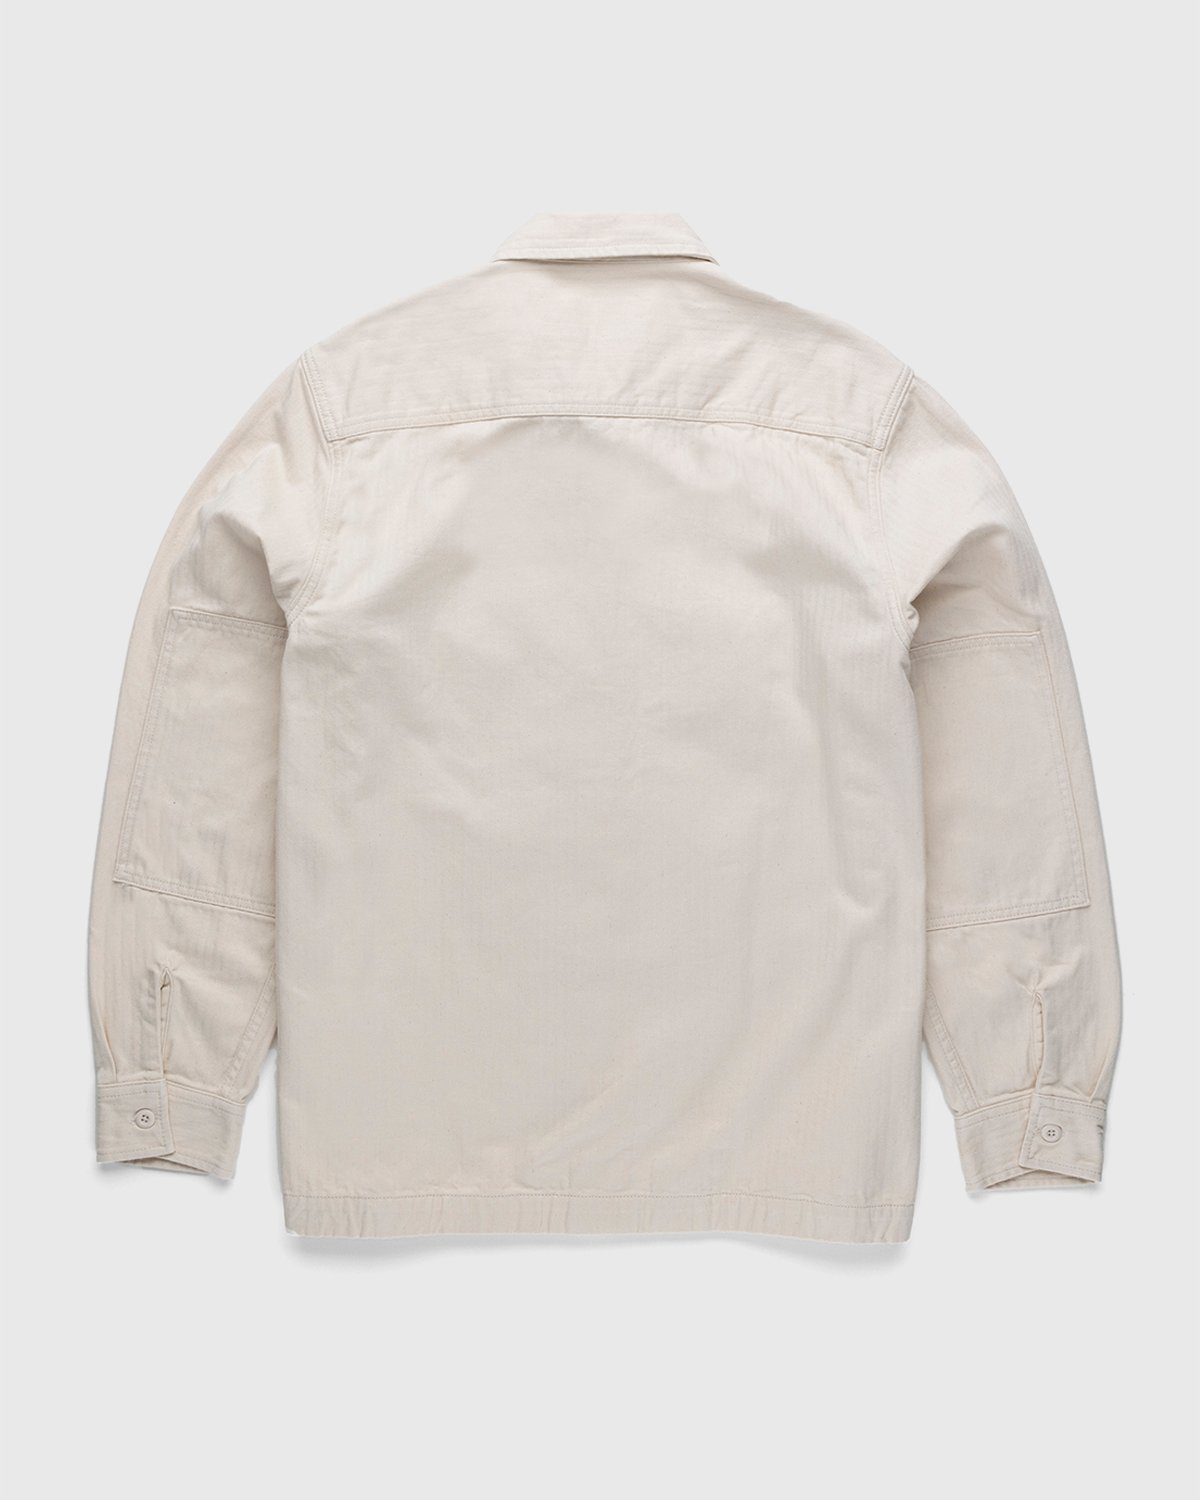 Carhartt WIP - Charter Shirt Natural - Clothing - Beige - Image 2